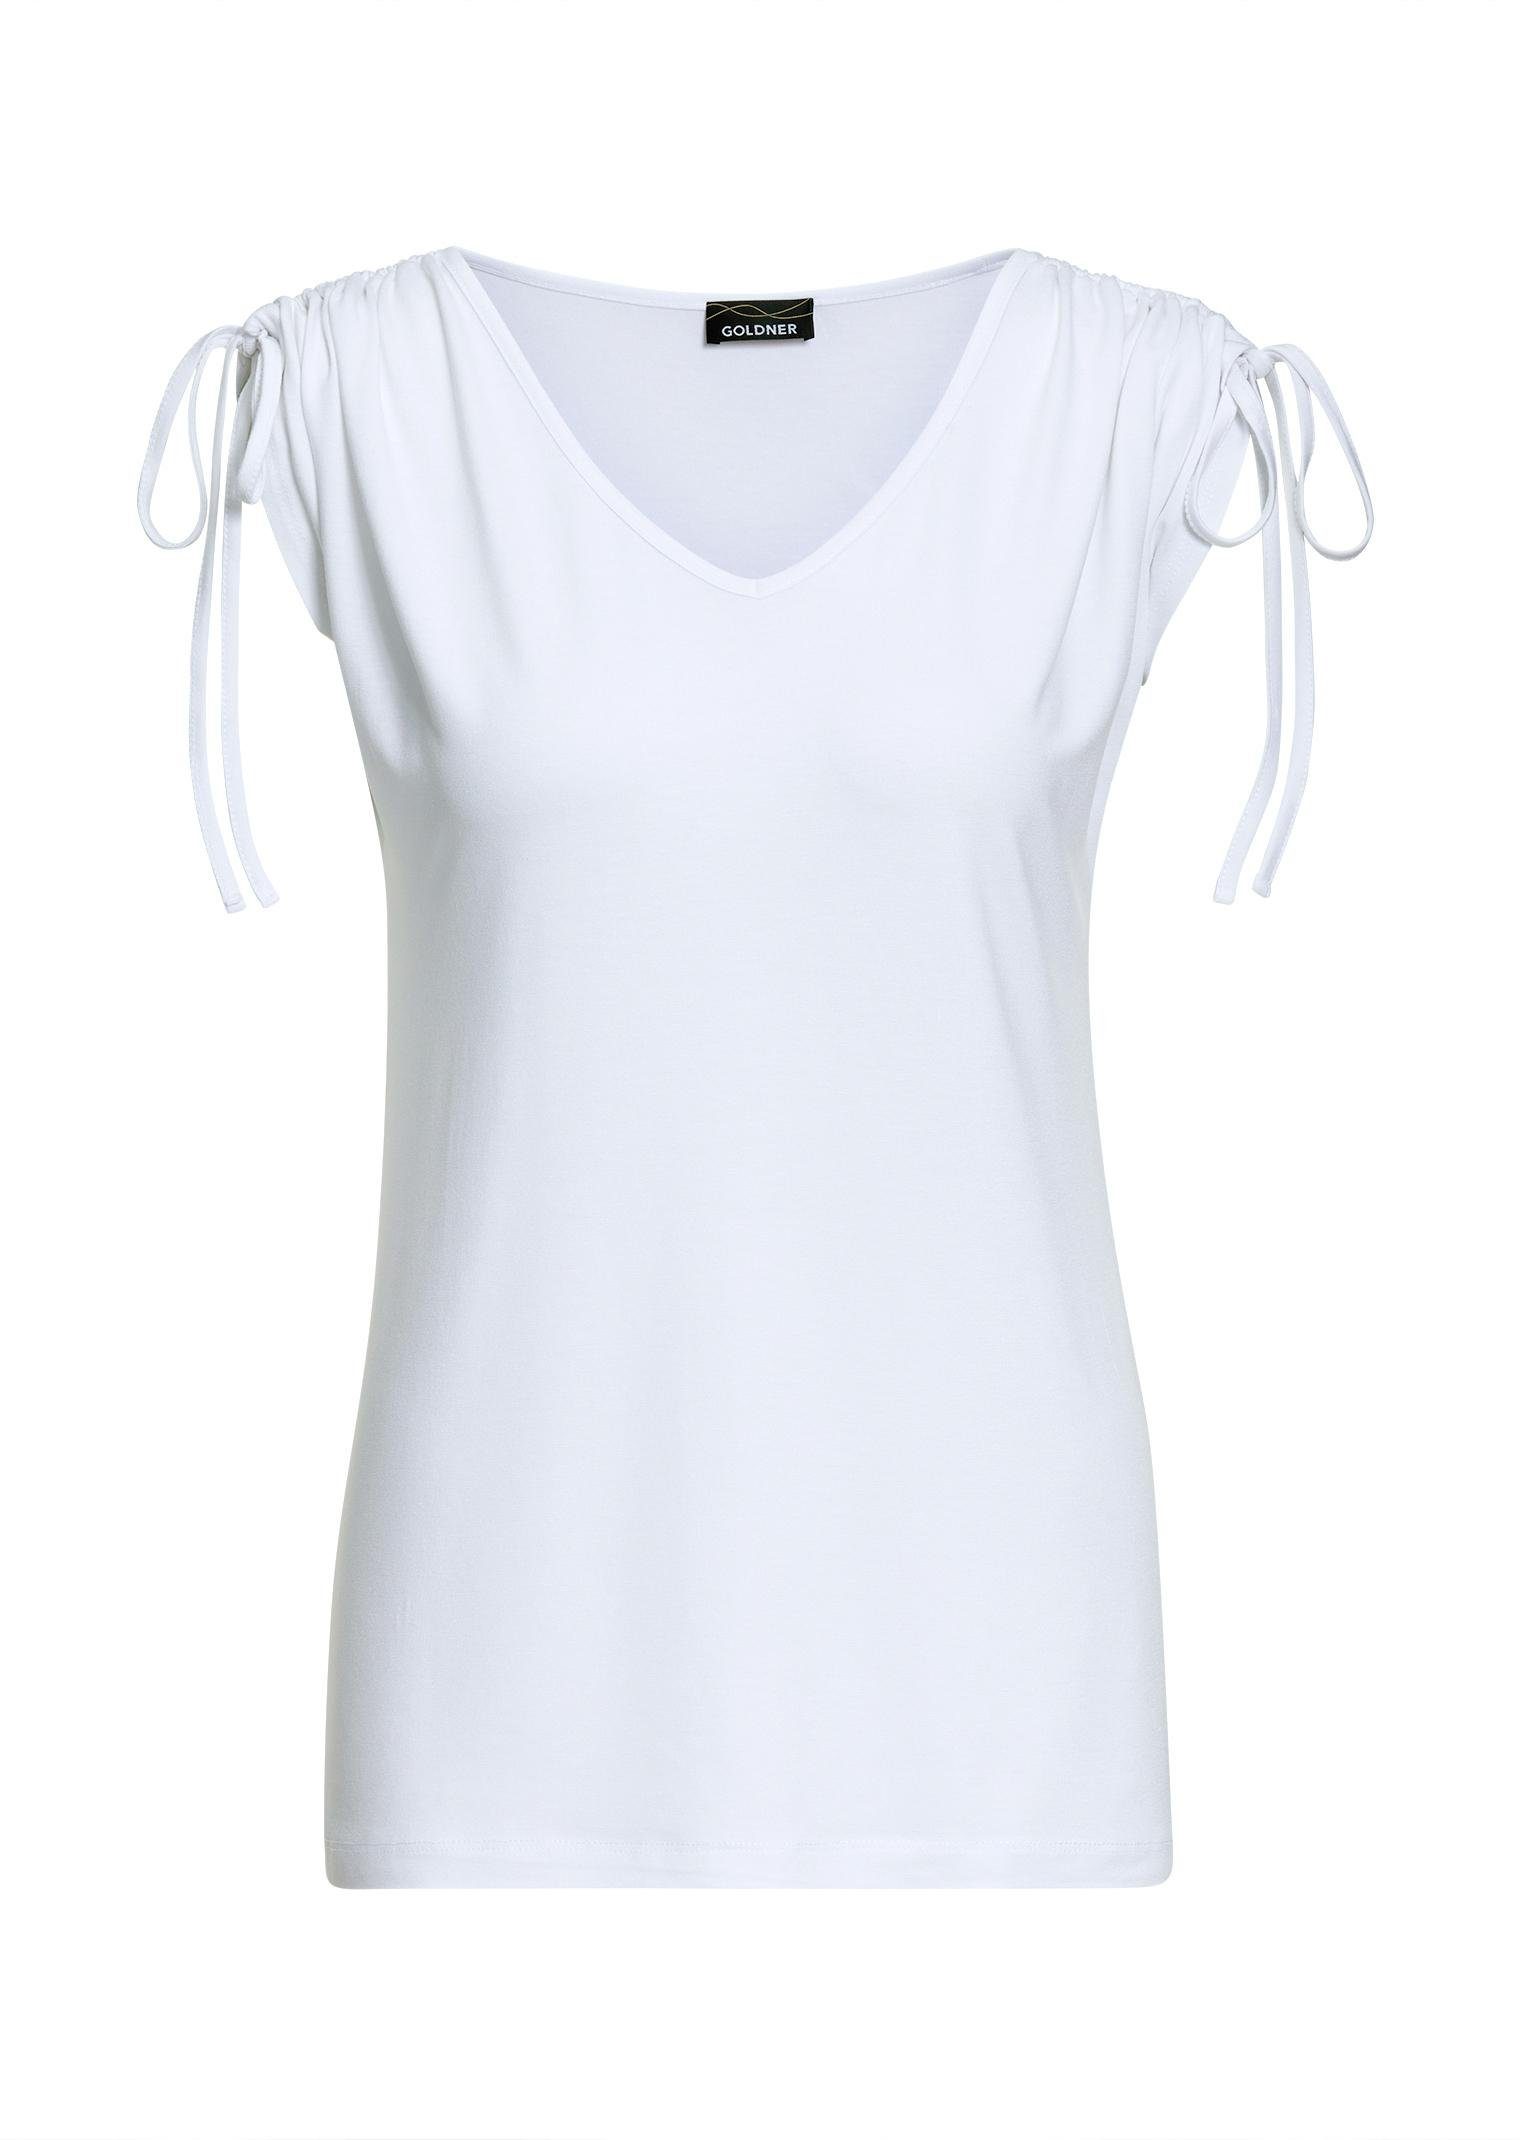 GOLDNER Print-Shirt Elegantes weiß Jersey-Shirt Kurzgröße